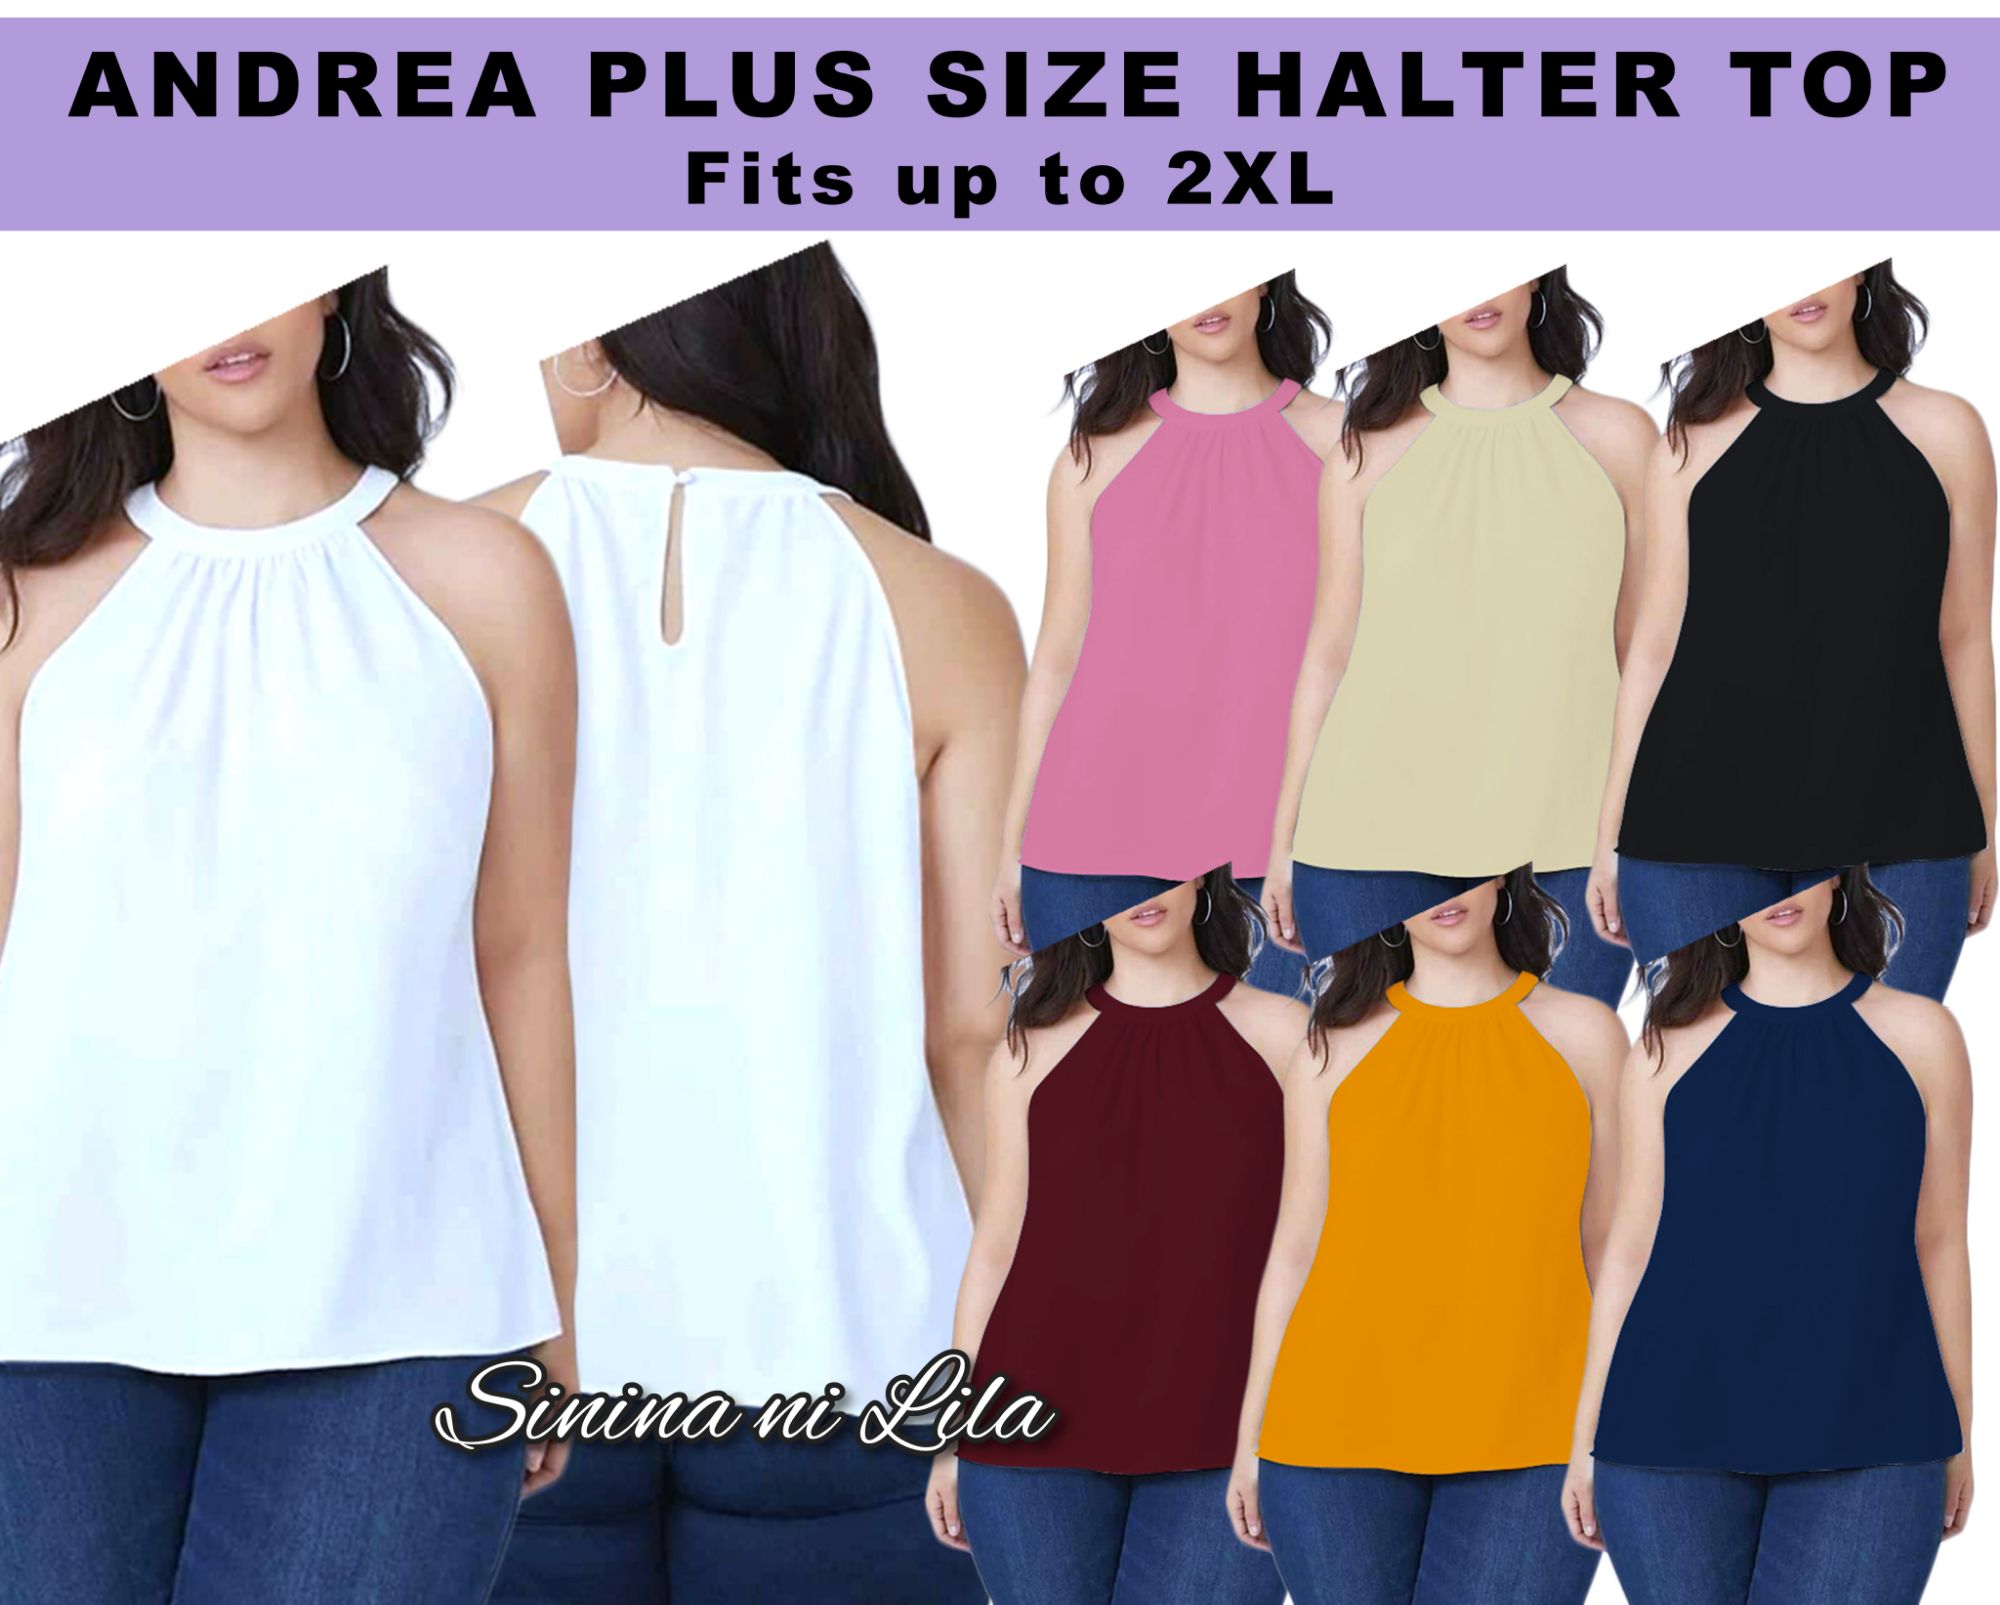 Andrea Plus Size Halter Top